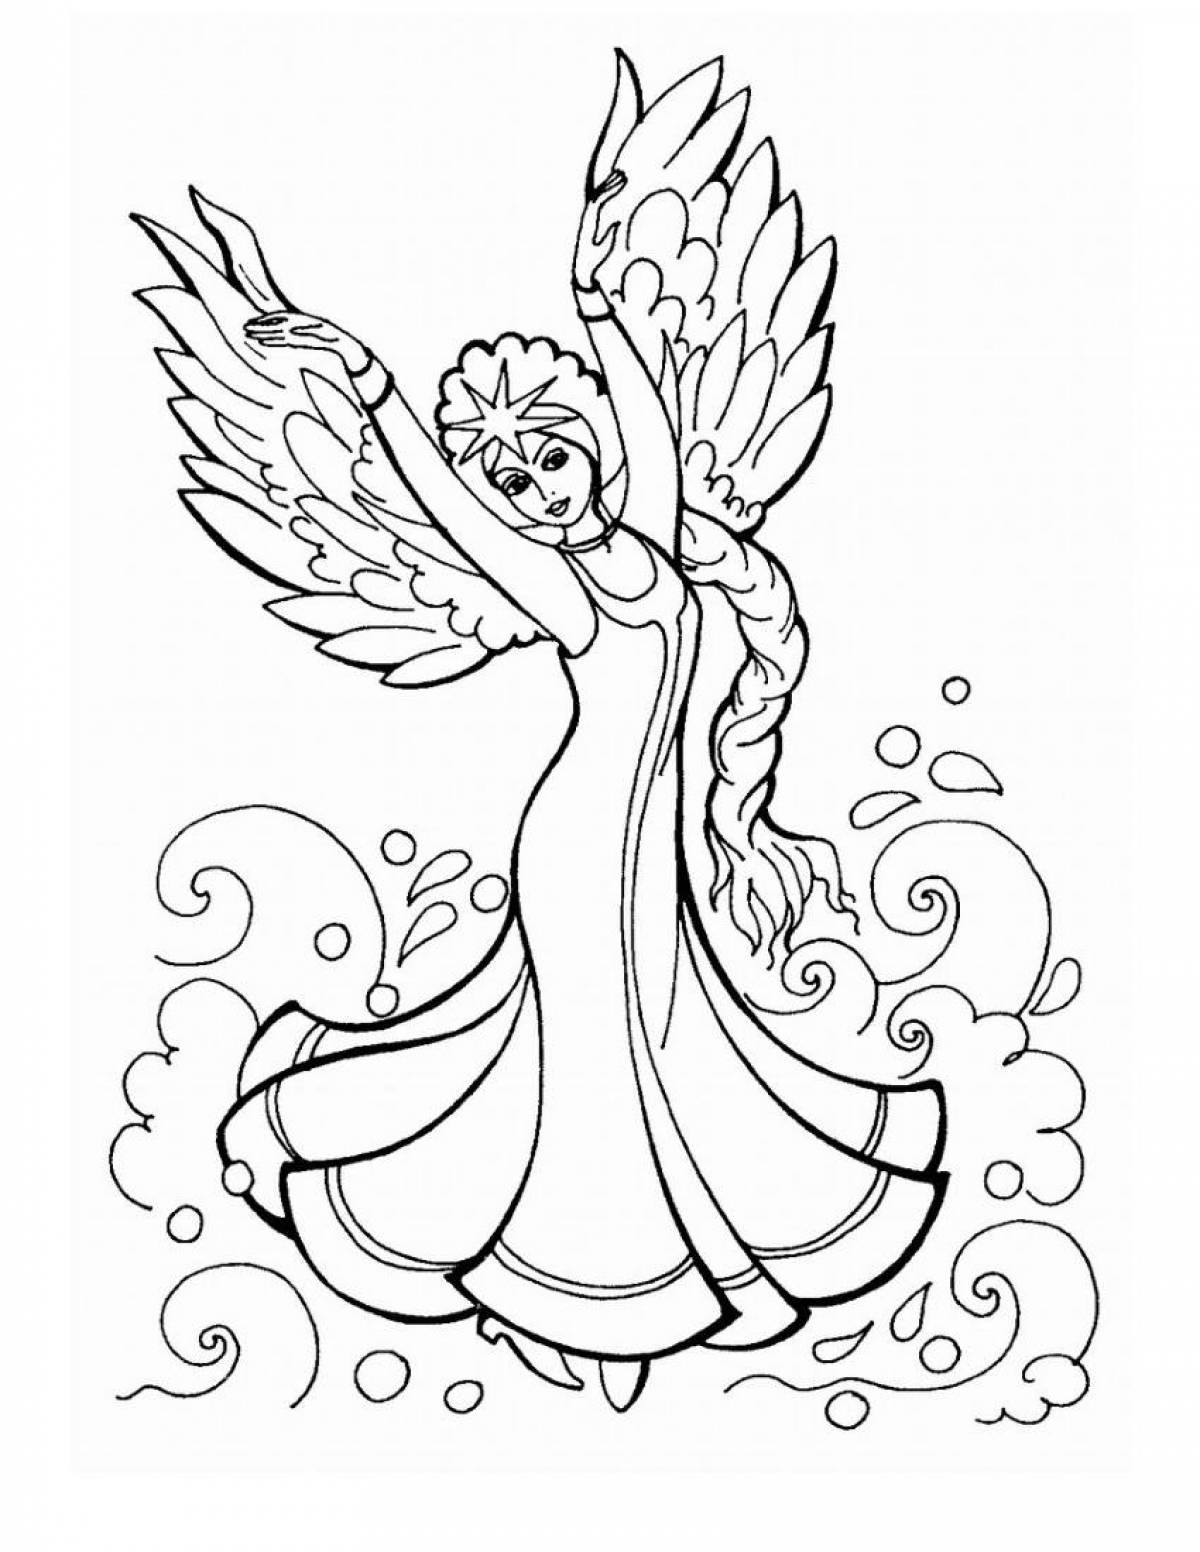 Coloring page princess - swan